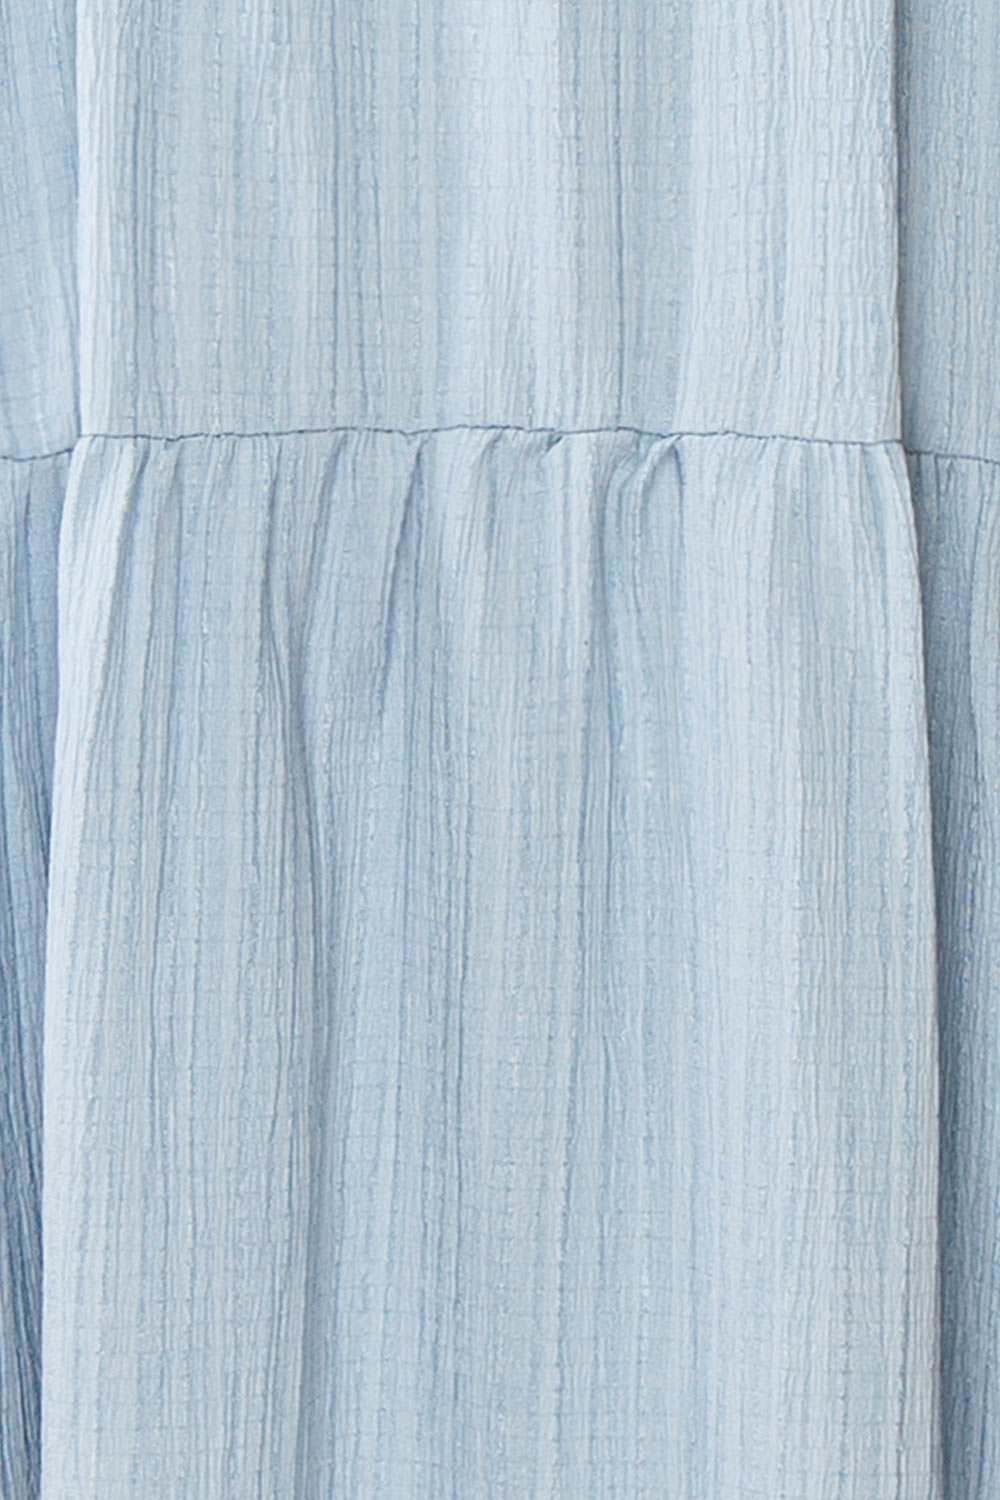 Damiana Long Blue Dress w/ Plunging Neckline | Boutique 1861 fabric